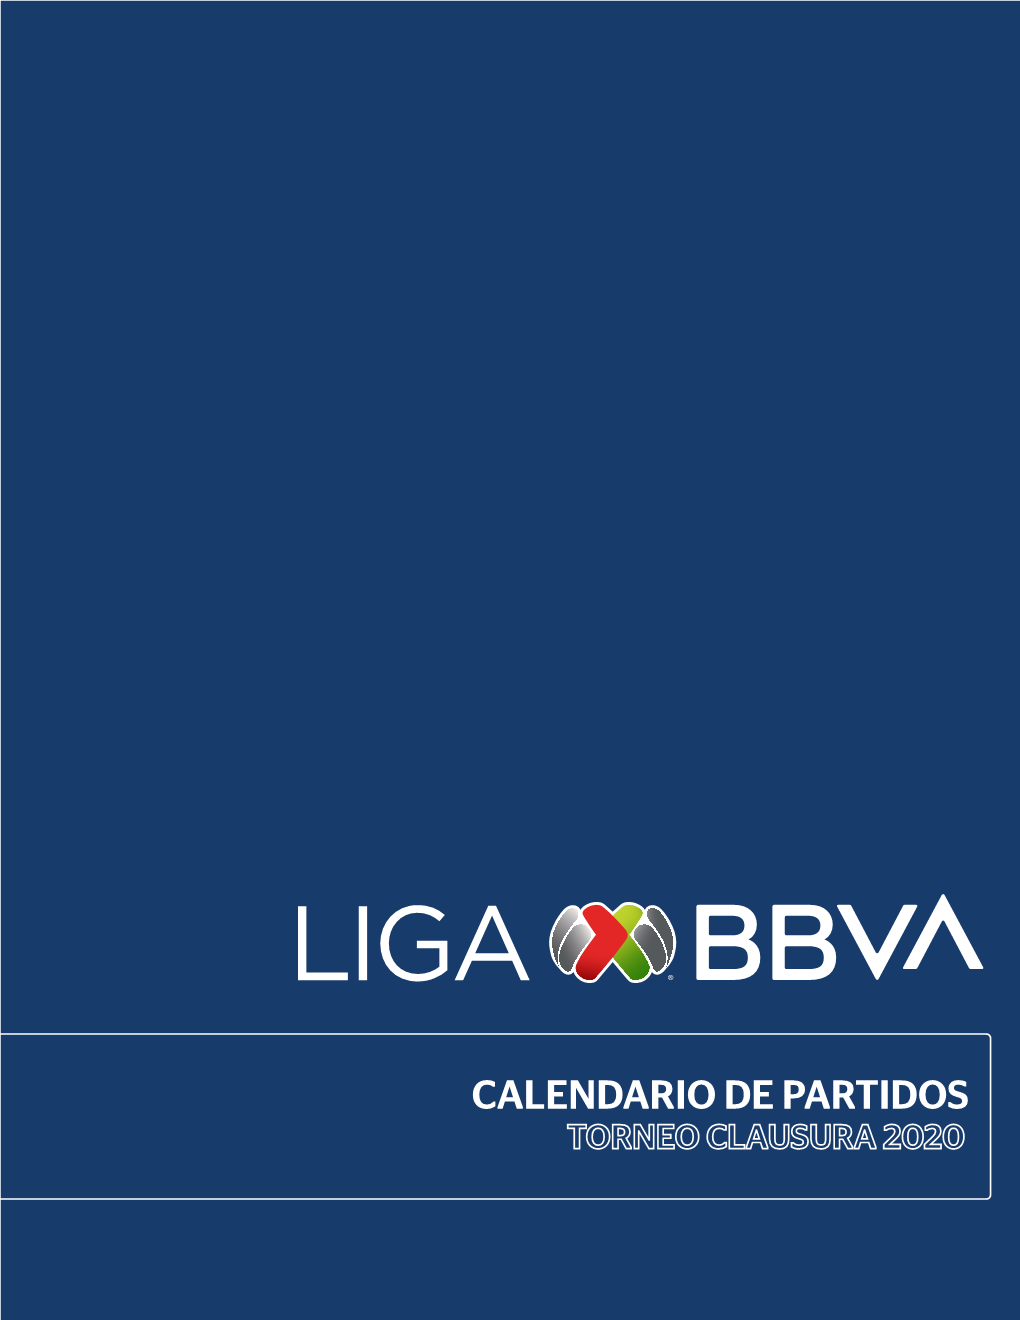 CALENDARIO DE PARTIDOS Torneo Clausura 2020 17 Jornadas - 153 Partidos Fase Final - CF, SF, F (Ida Y Vuelta) 14 Partidos